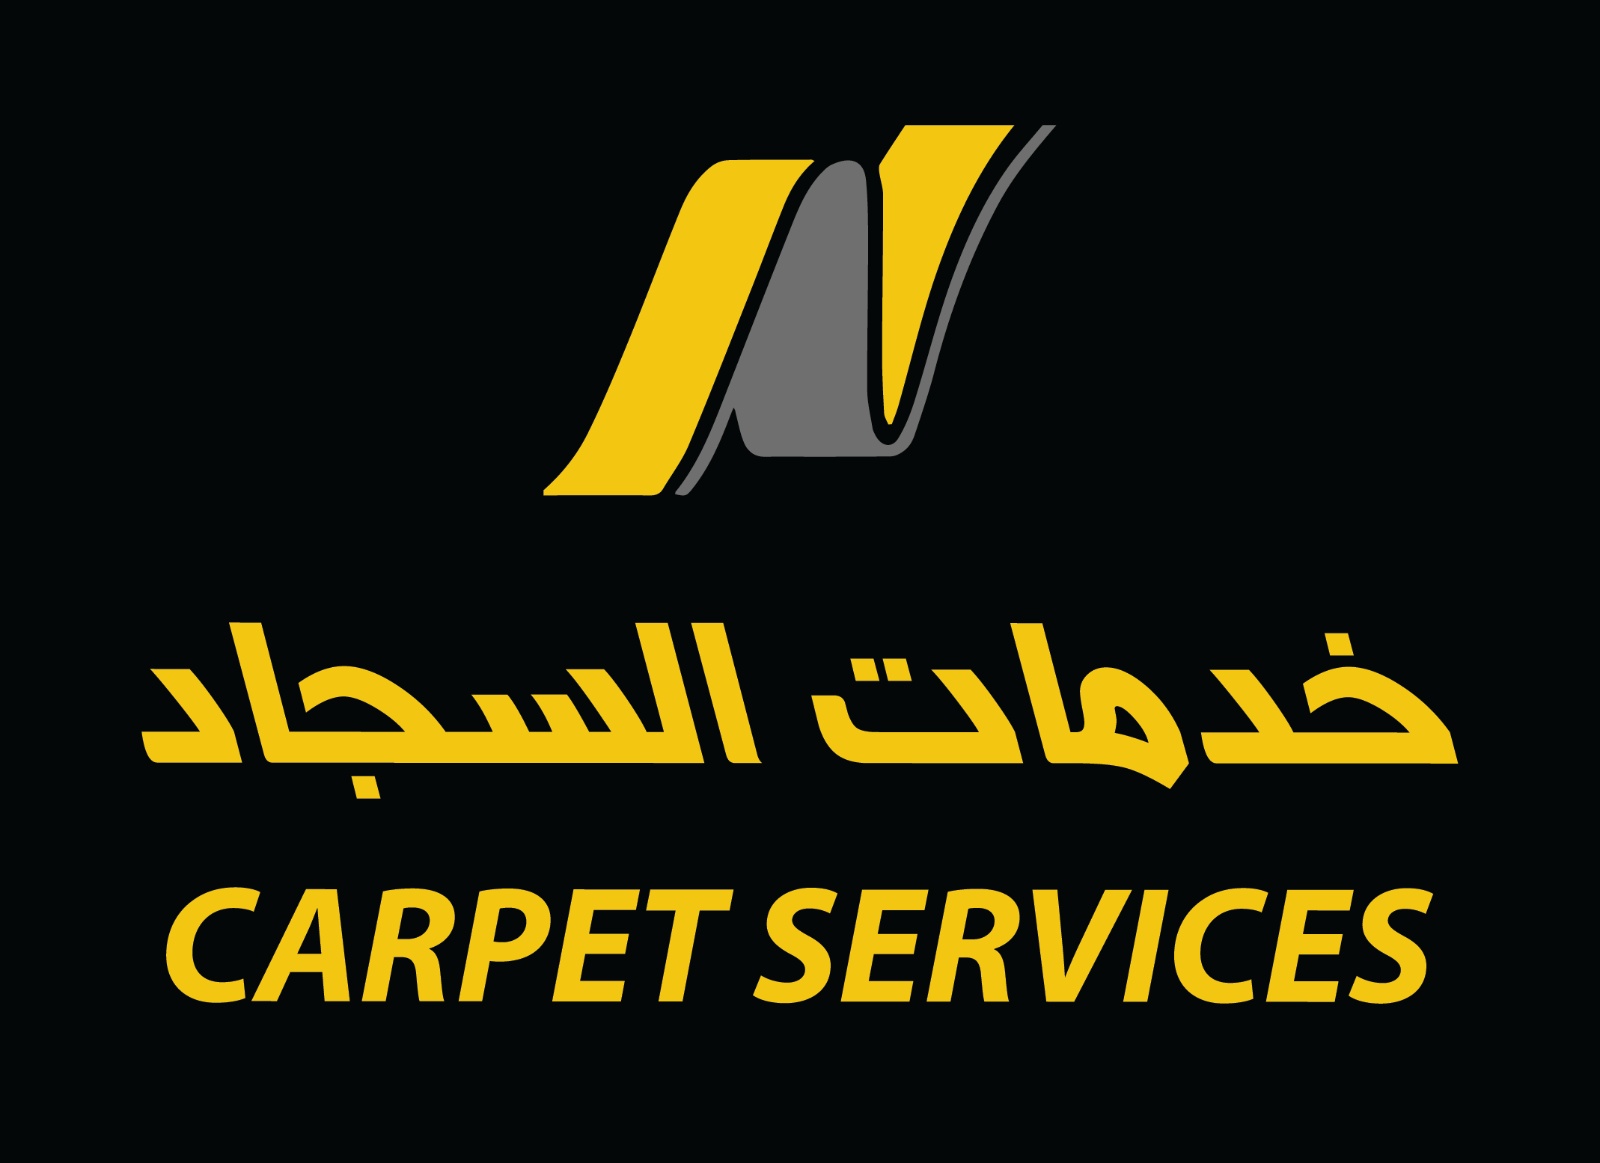 CARPET SERVICES - خدمات السجاد